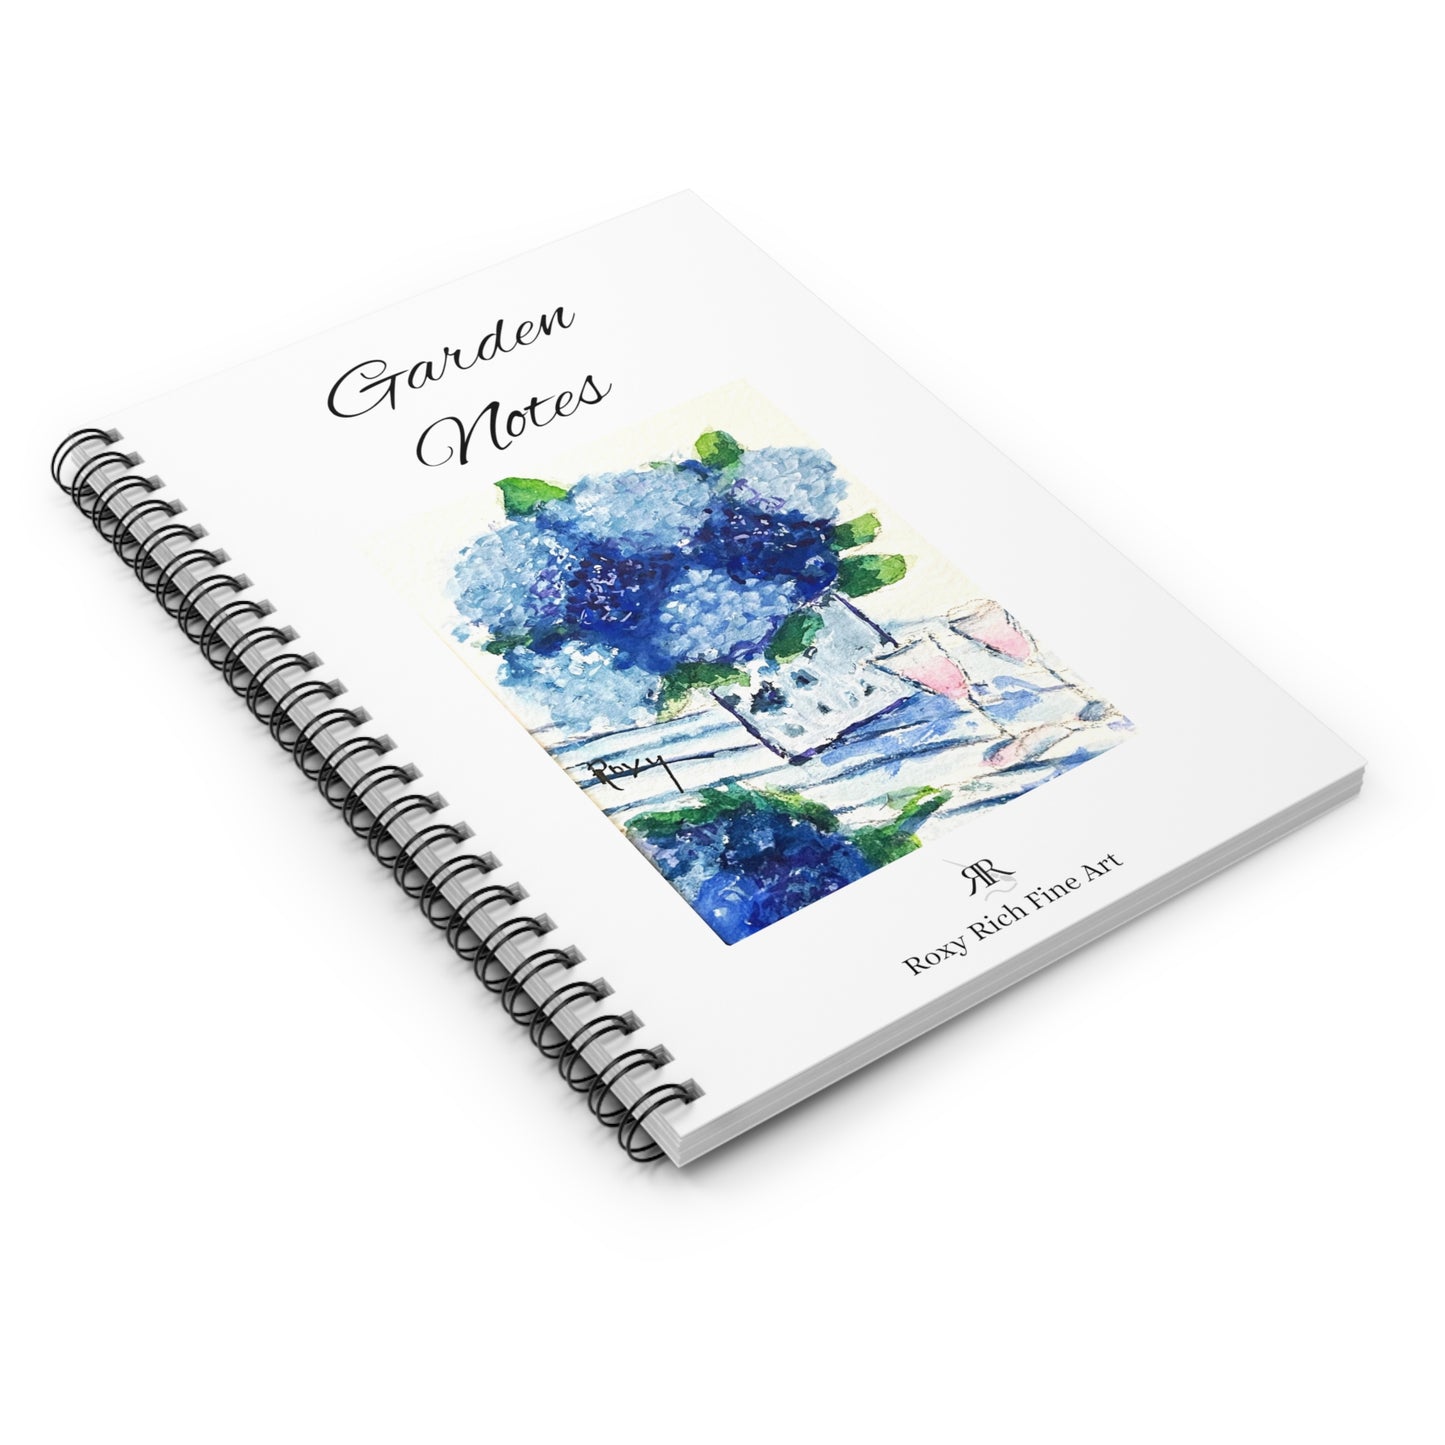 Garden Notes "Blue Hydrangeas on the Table" Spiral Notebook